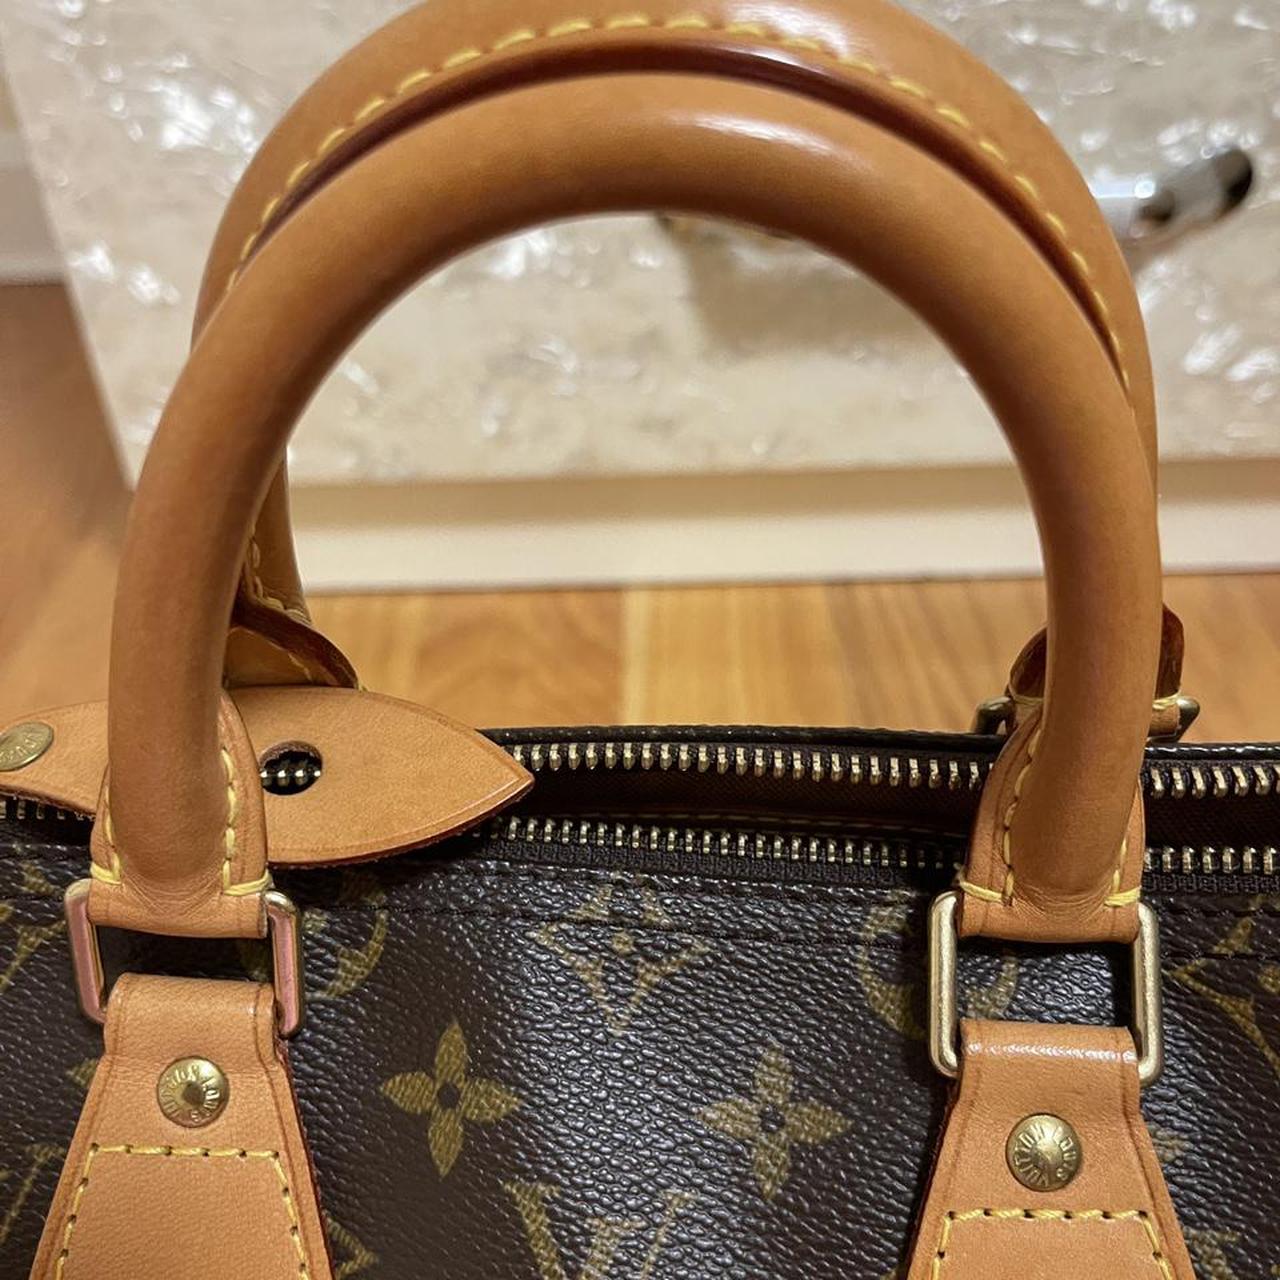 Louis Vuitton Women's Bag (4)